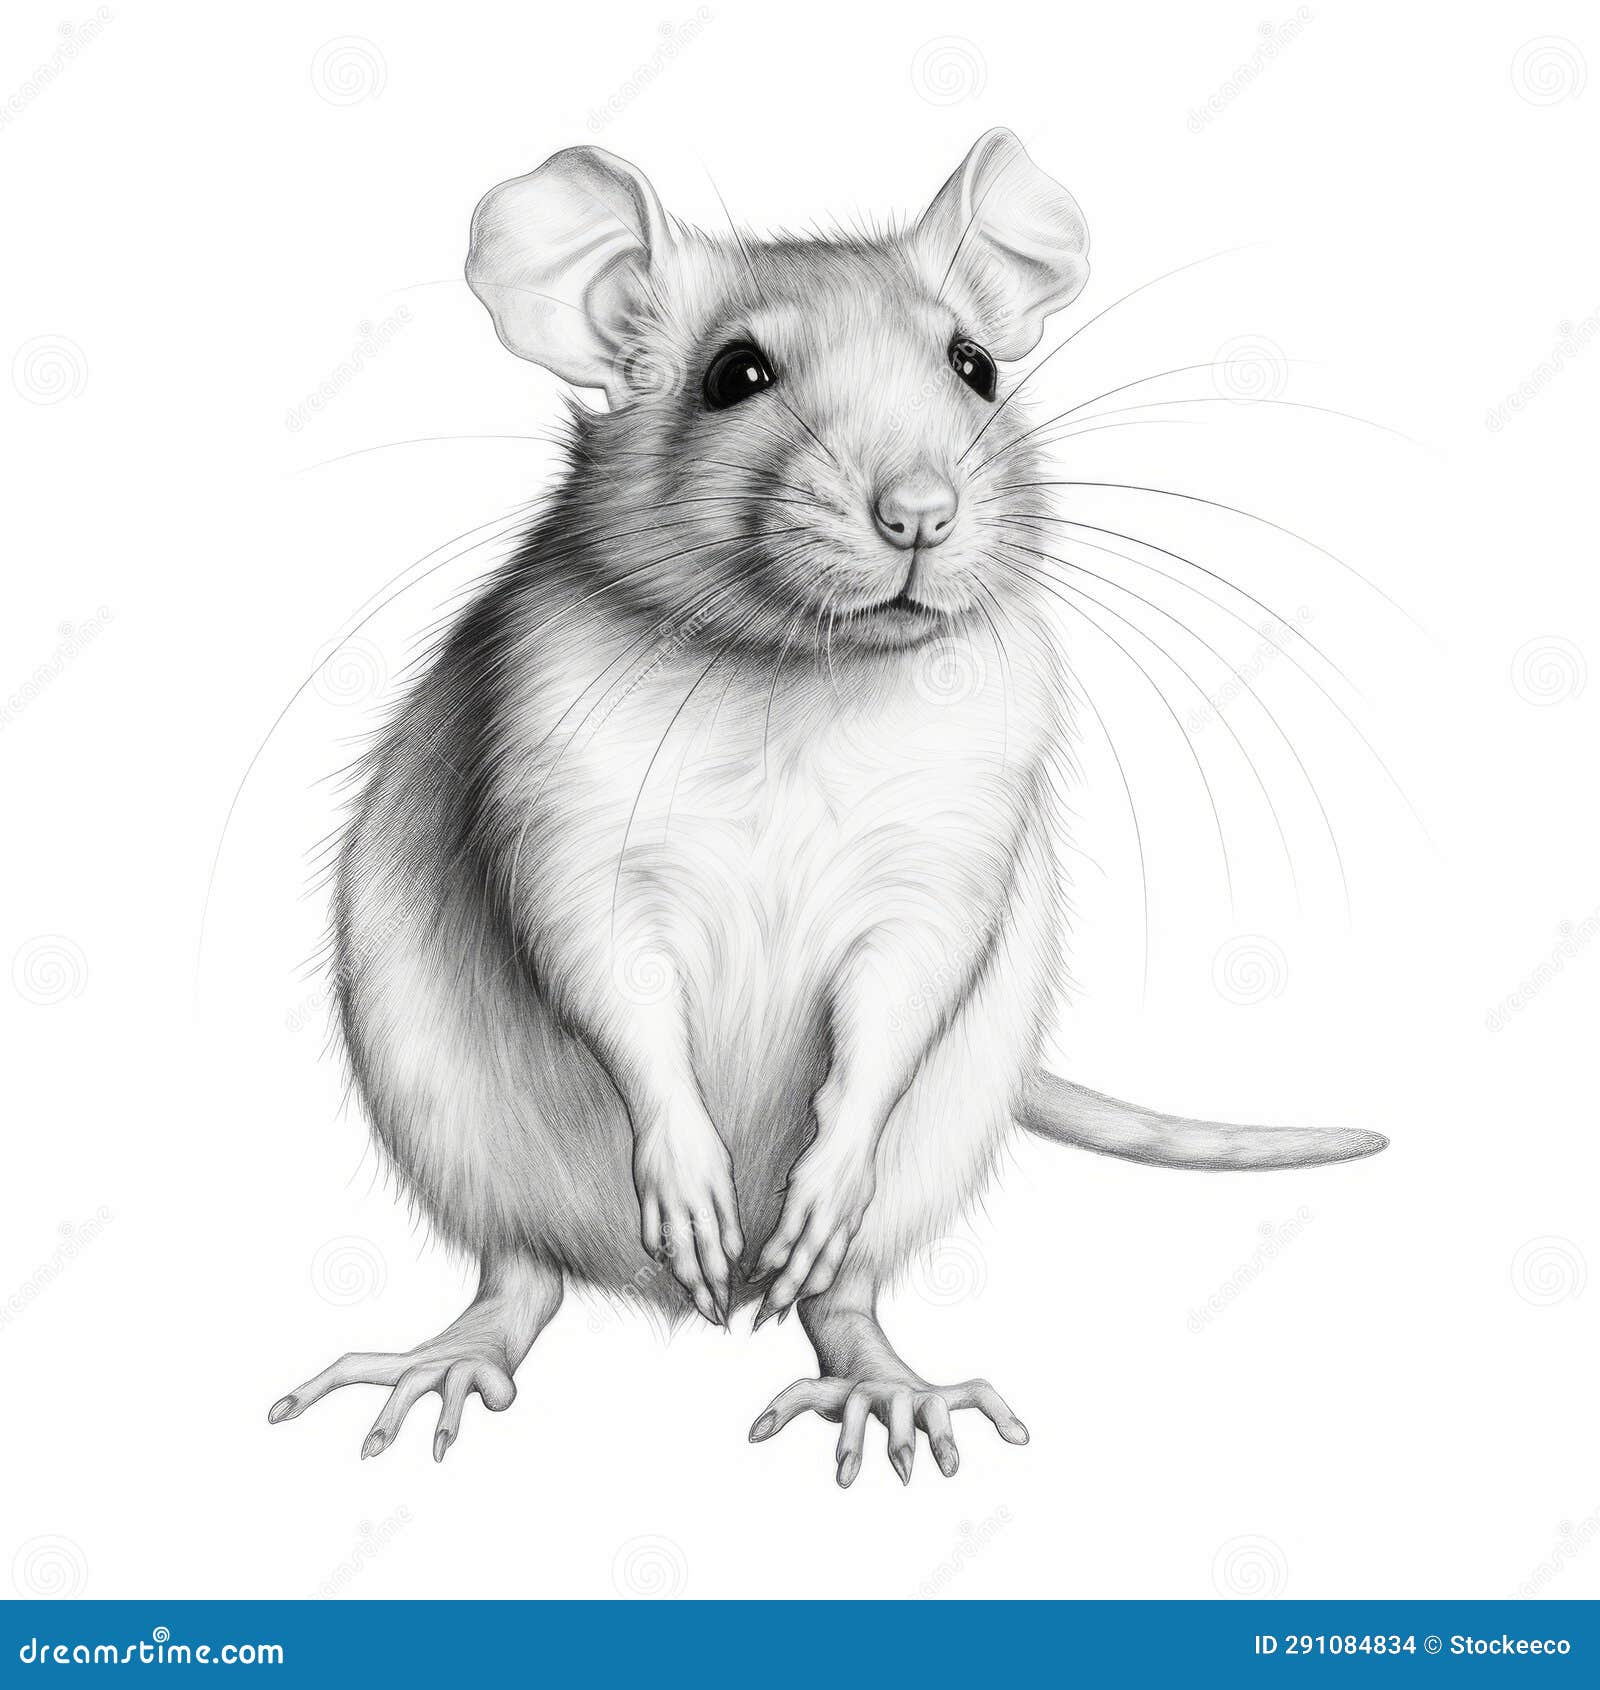 Life Drawing - Rat :: Behance